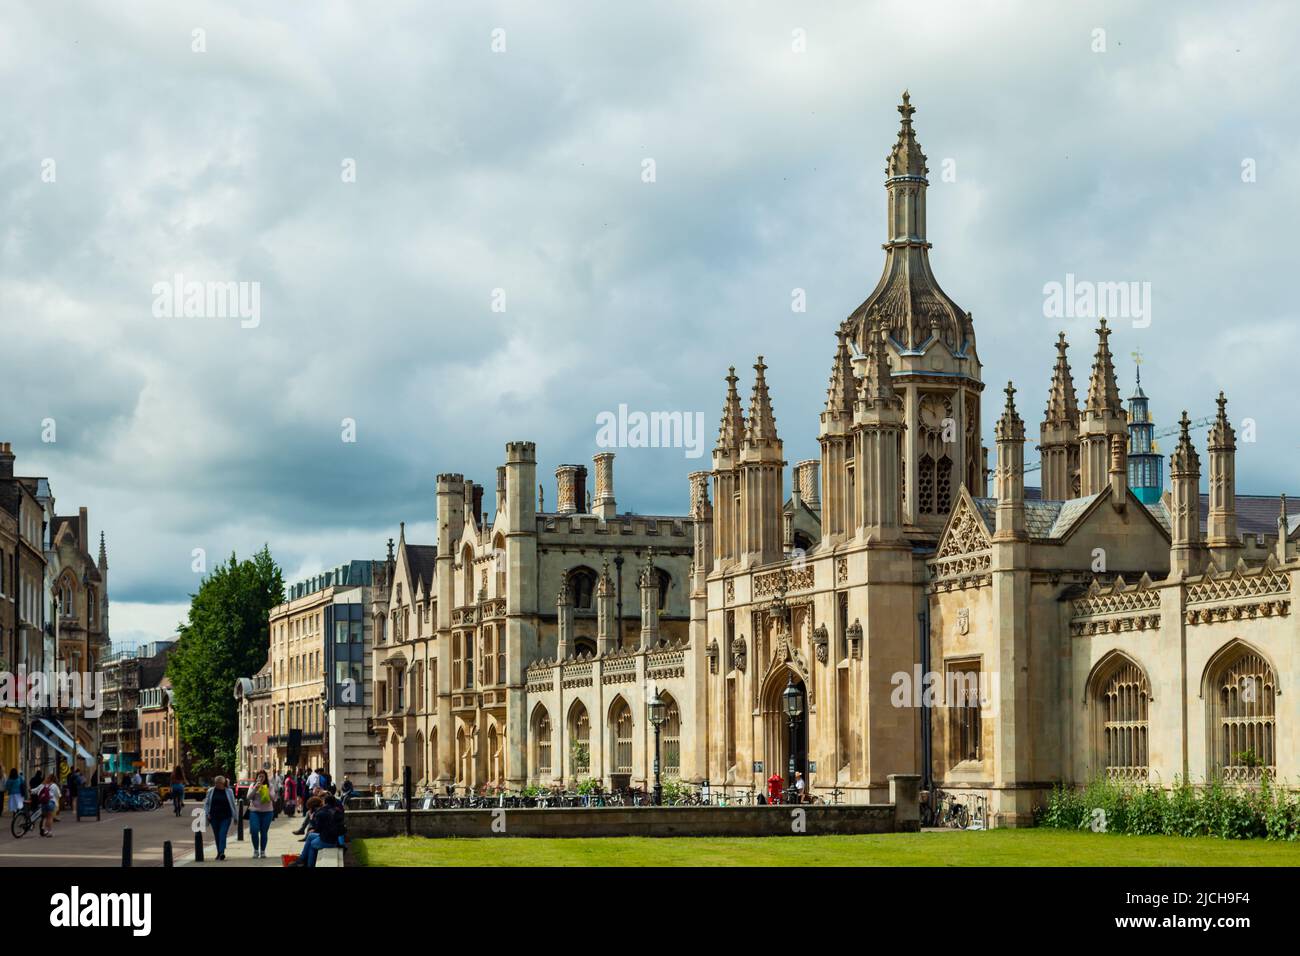 Spring morning at King's College, part of Cambridge University. Cambridge, England. Stock Photo